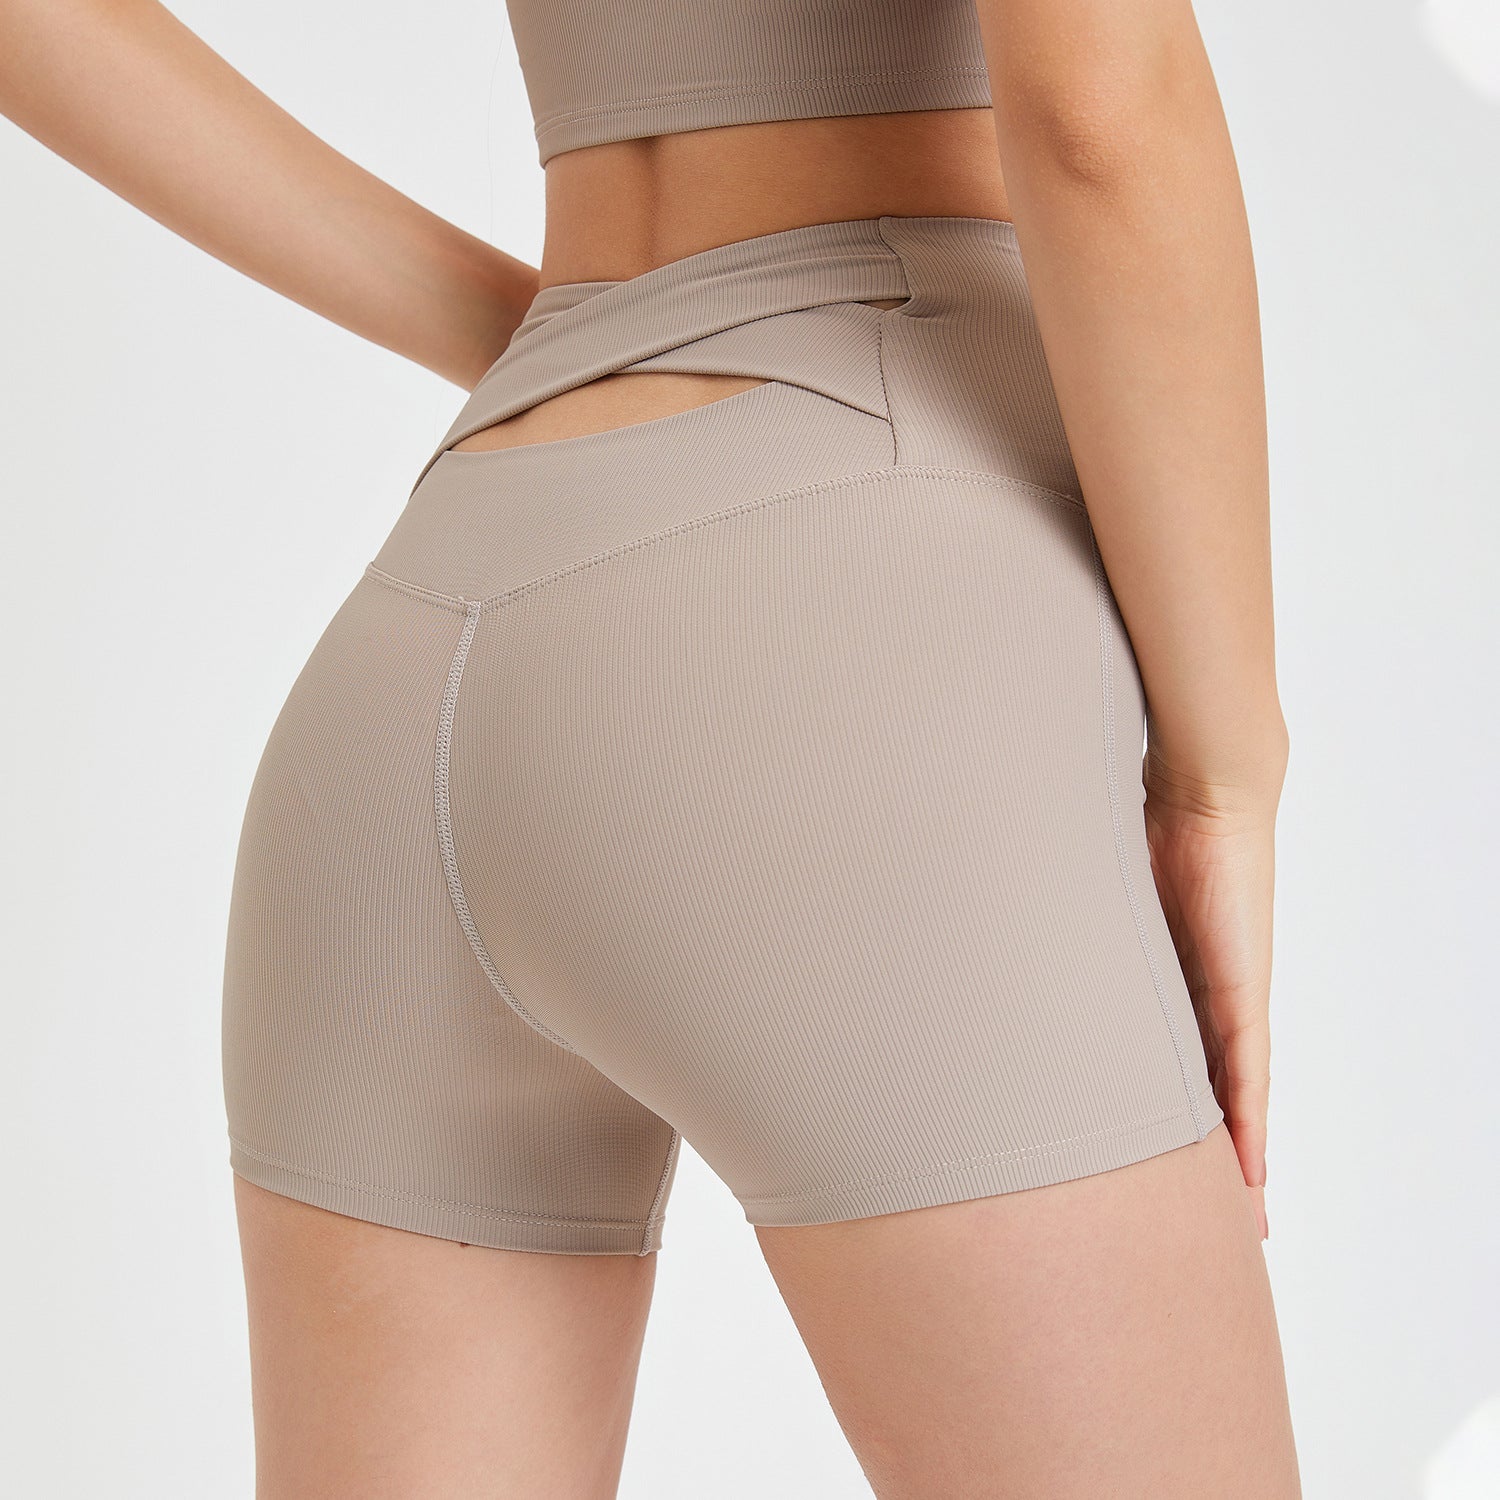 High Waist Peach Hip Yoga Shorts Women Seamless Sports Pants Quick-drying Fitness Pants